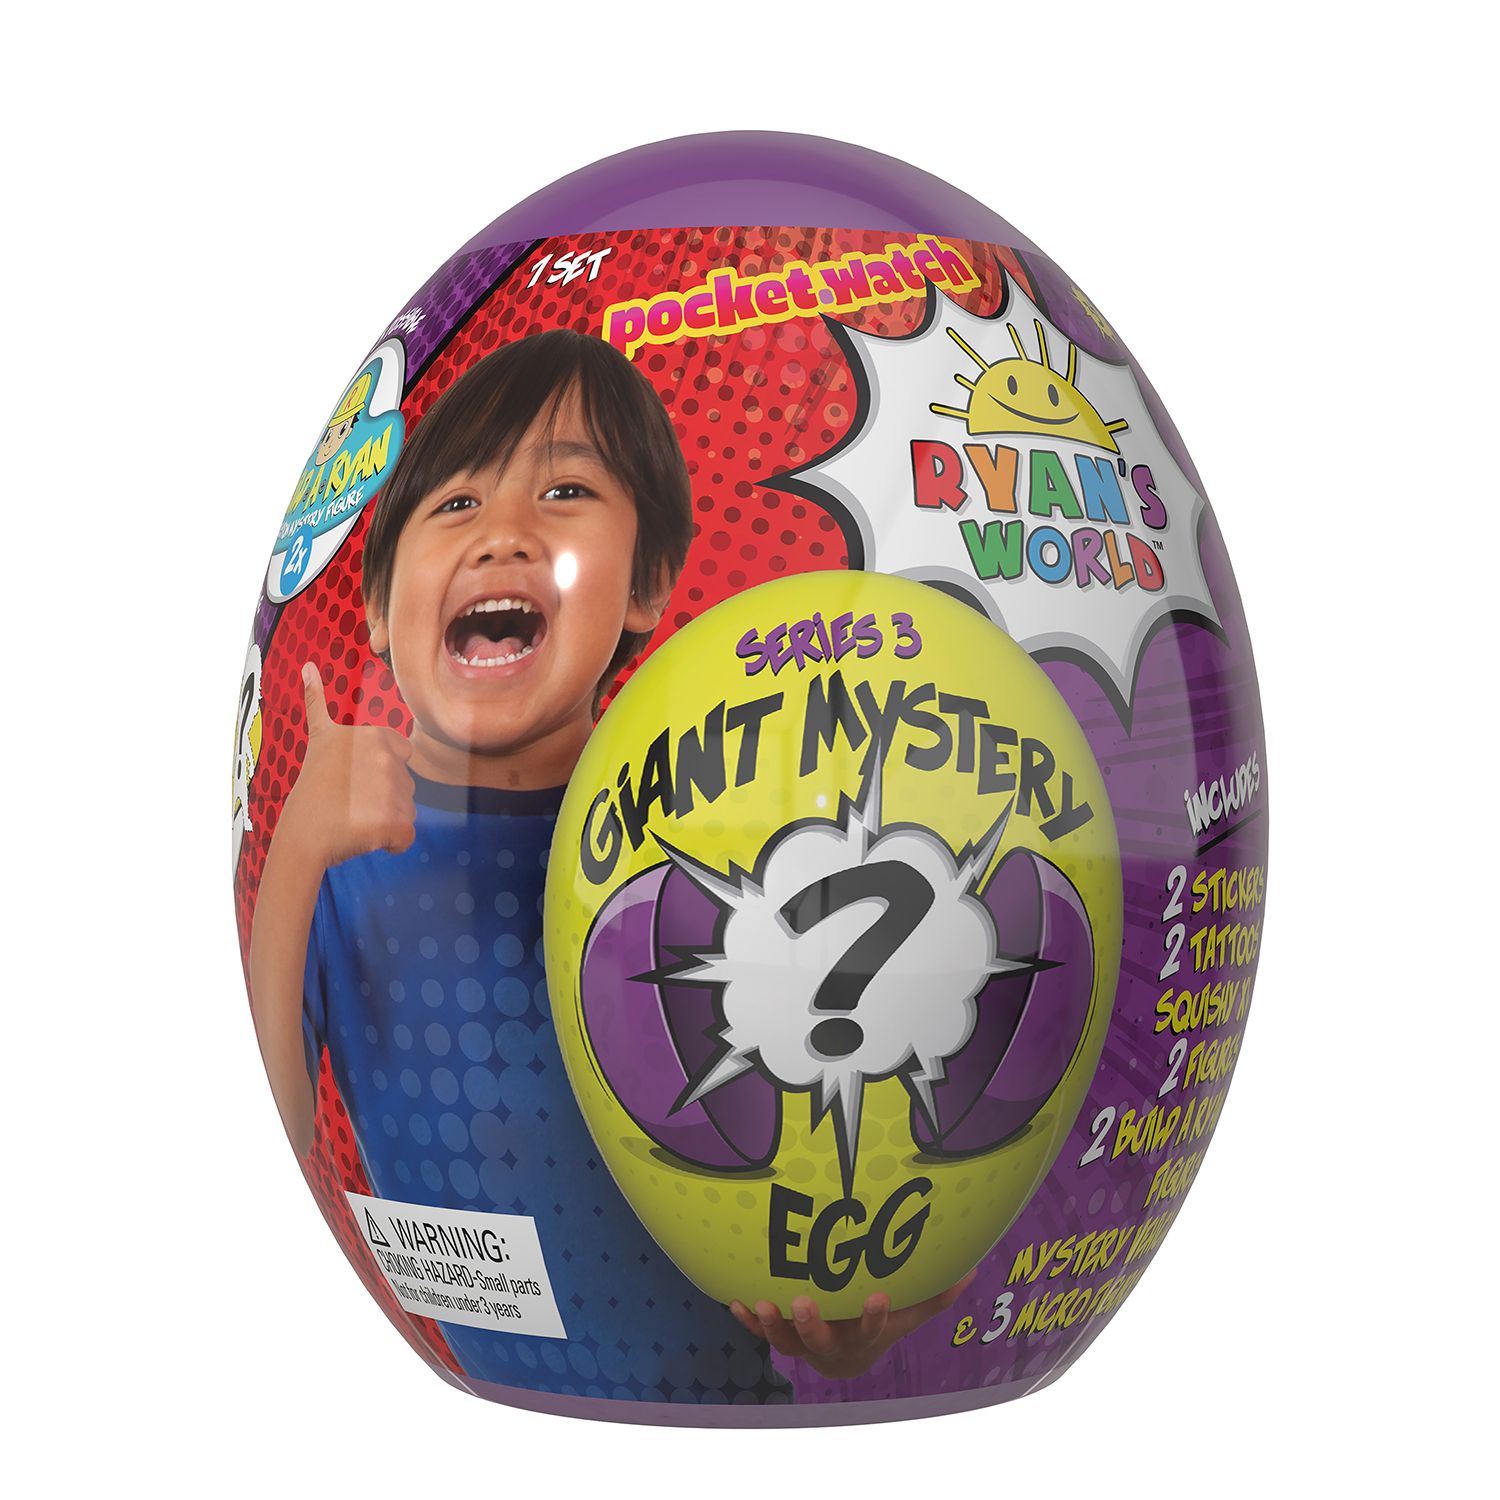 ryan's world mystery egg